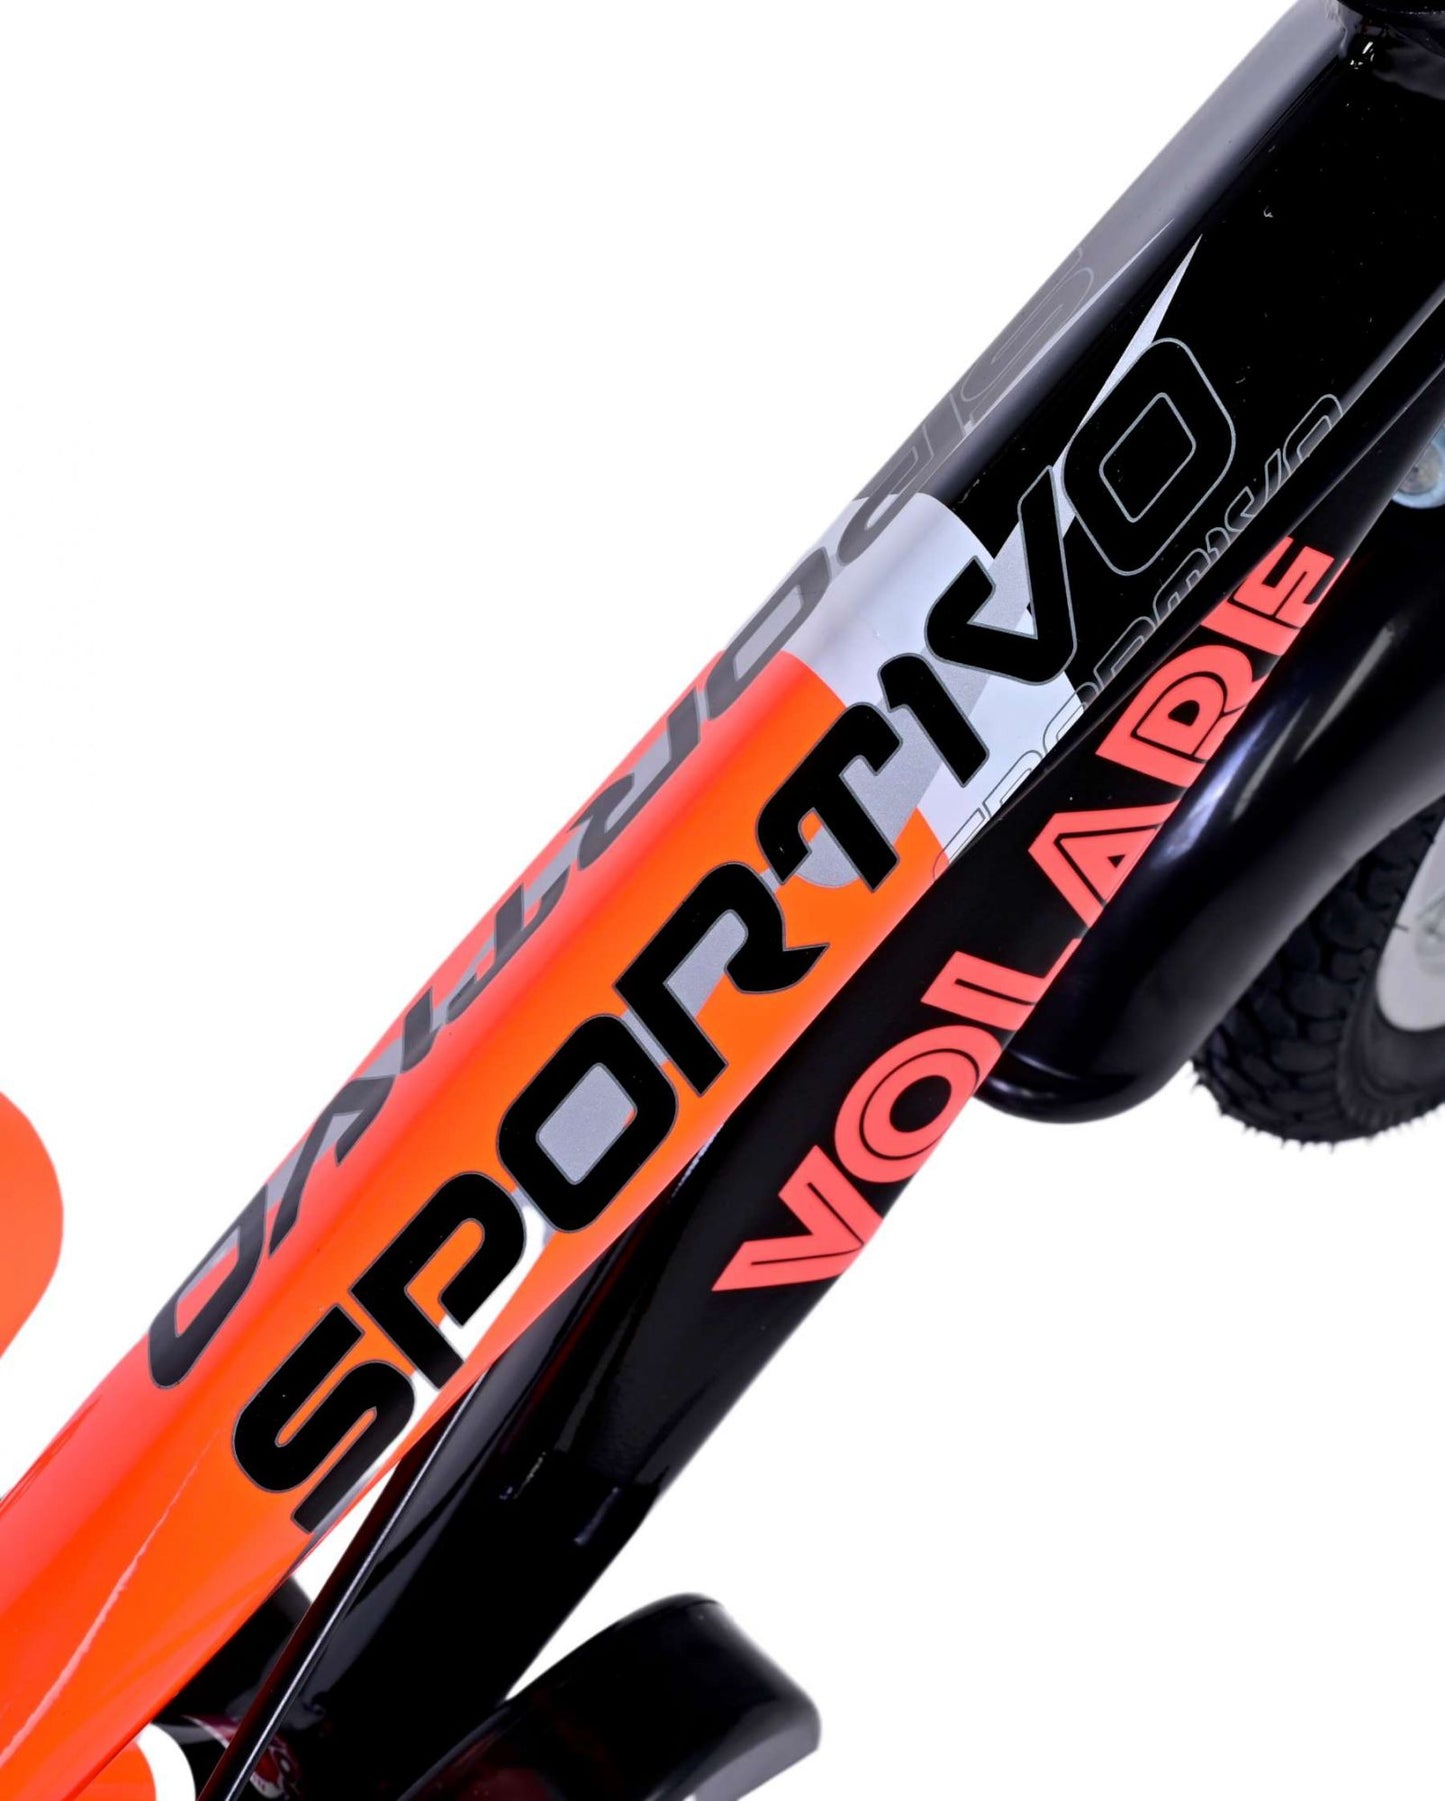 Bicicleta para niños Volare Sportivo - Niños - 14 pulgadas - Neon Oranje Black - Dos frenos de mano